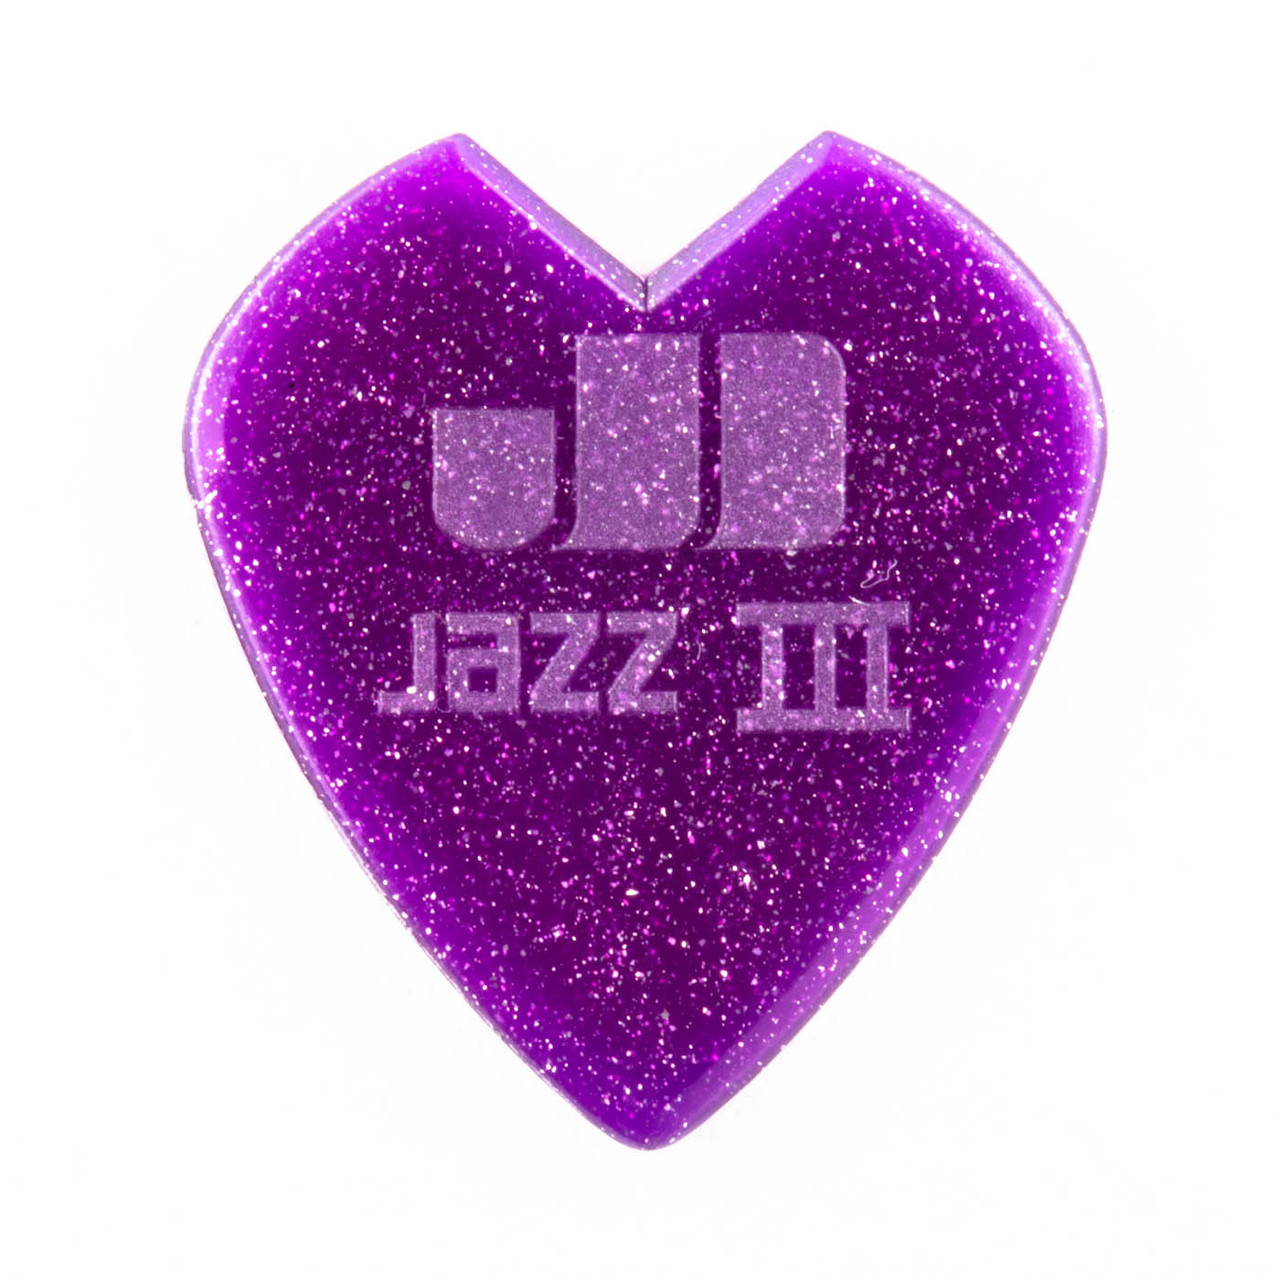 Jim Dunlop Kirk Hammett Jazz Iii Pick Purple Sparkle X24 - Plektren - Variation 3